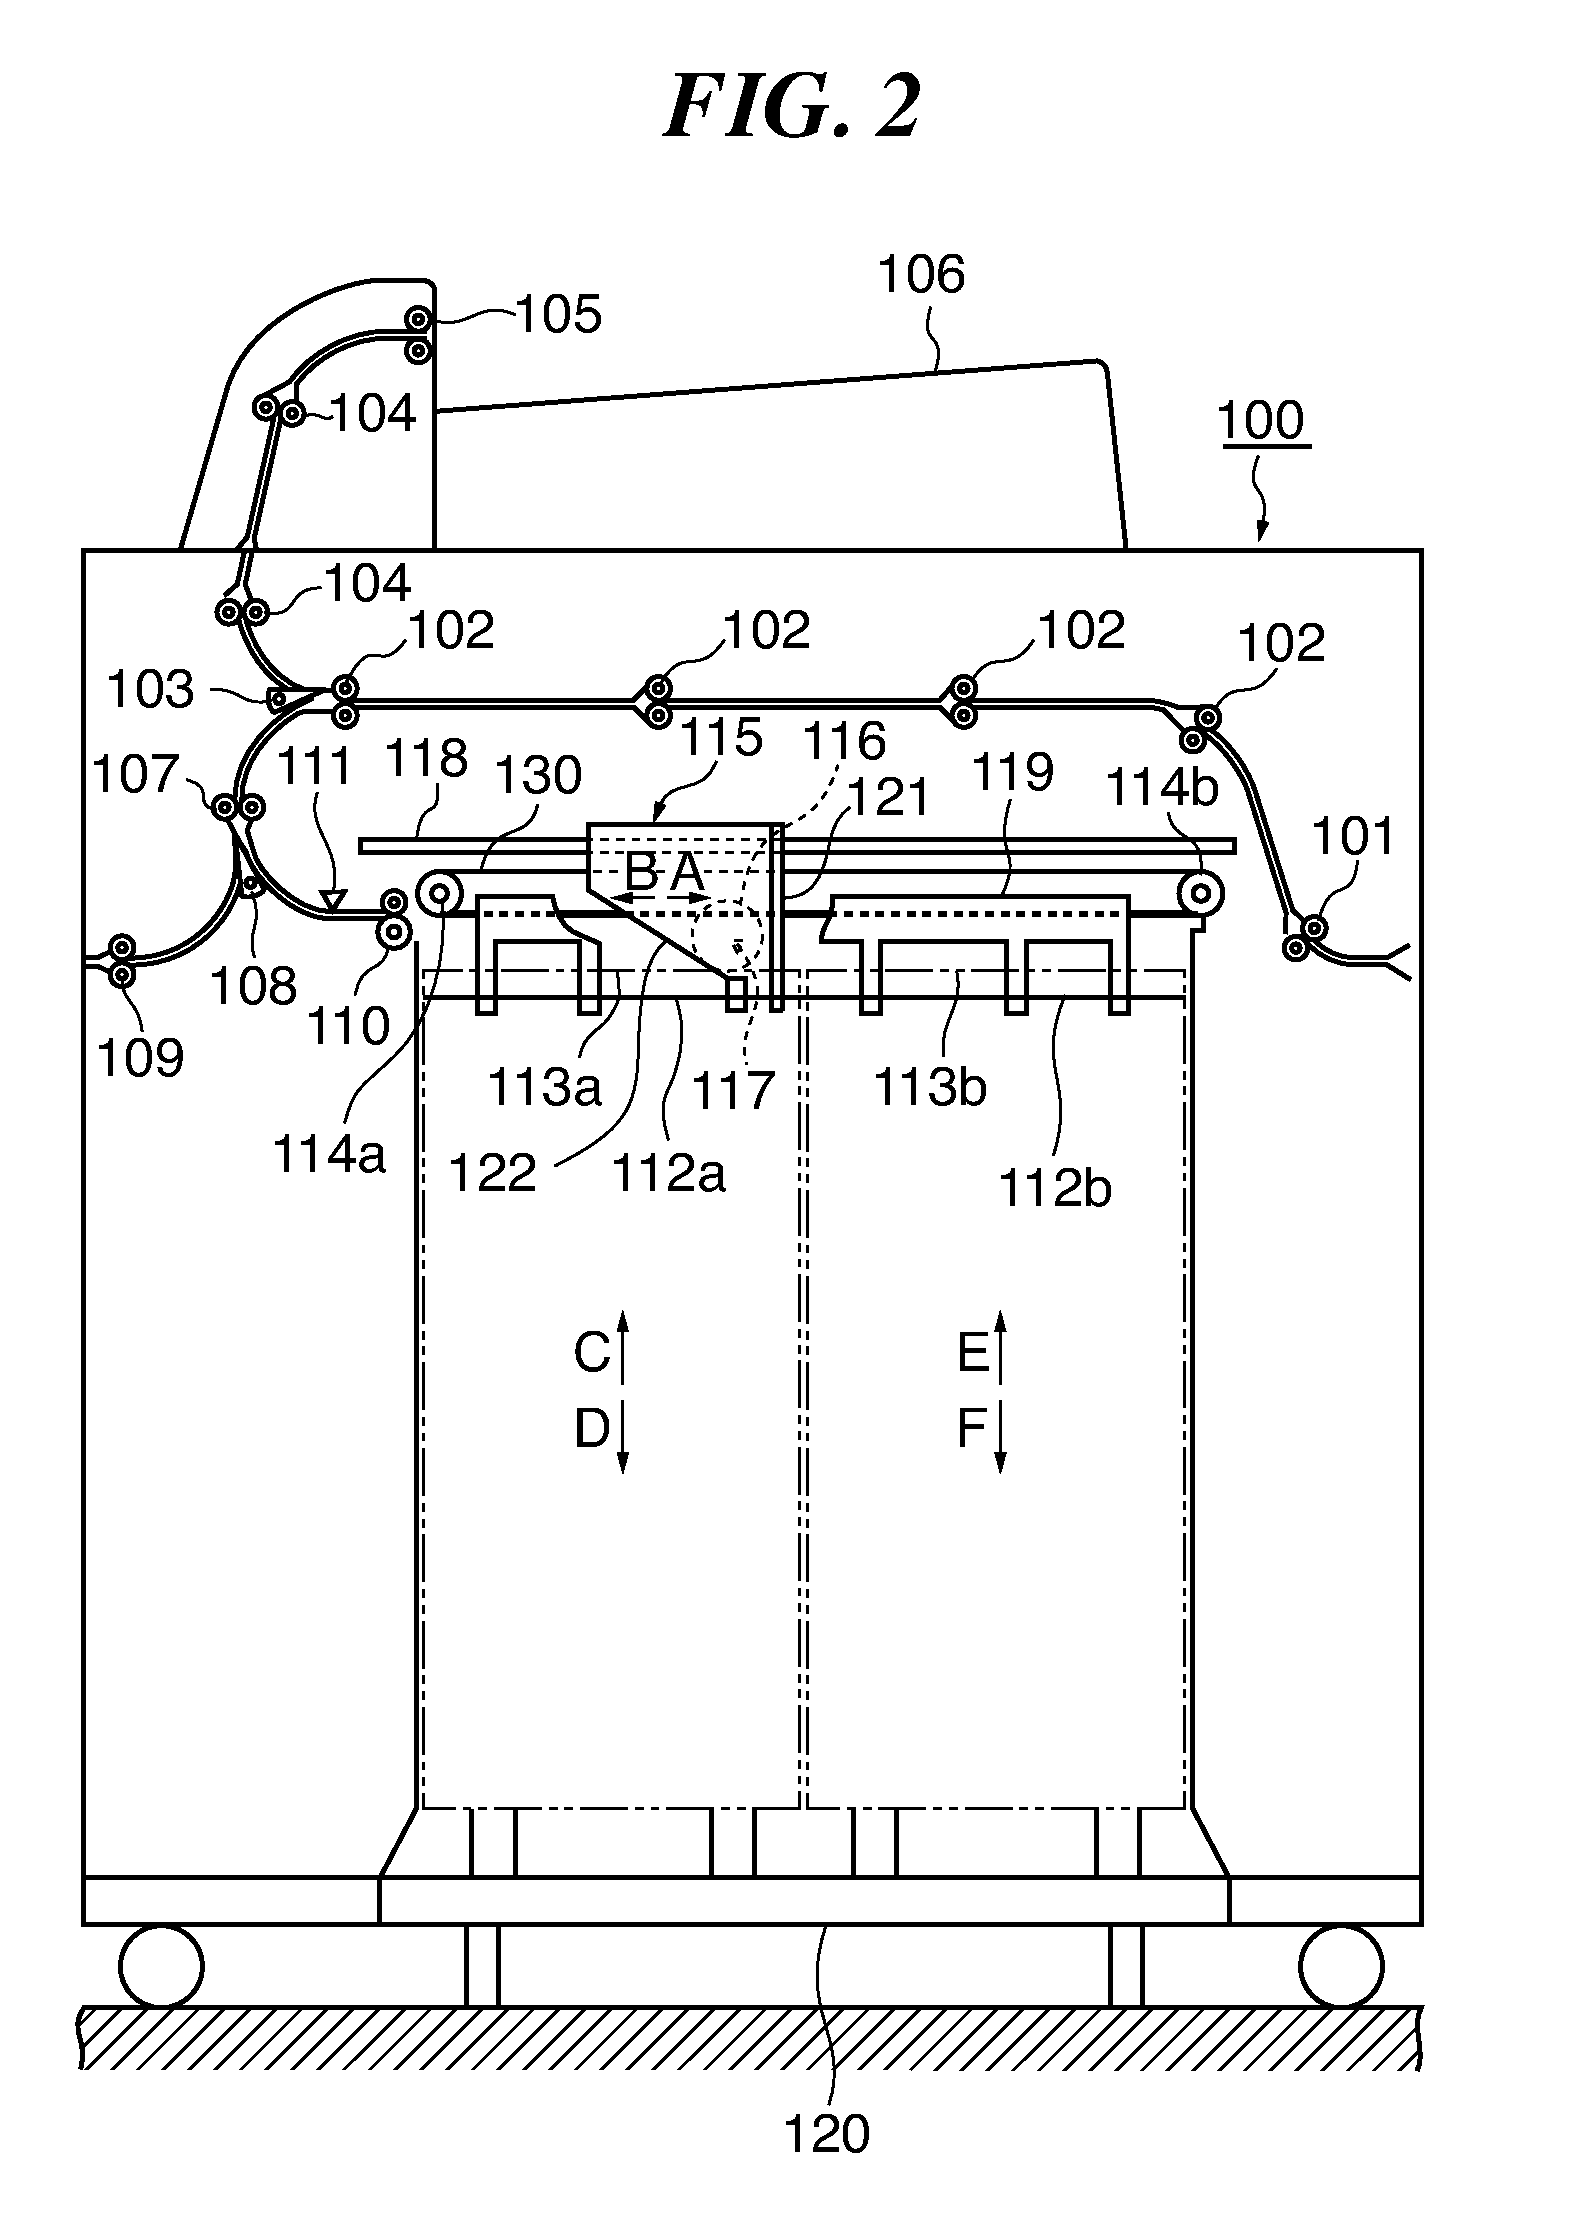 Sheet stacking apparatus and method of controlling the sheet stacking apparatus